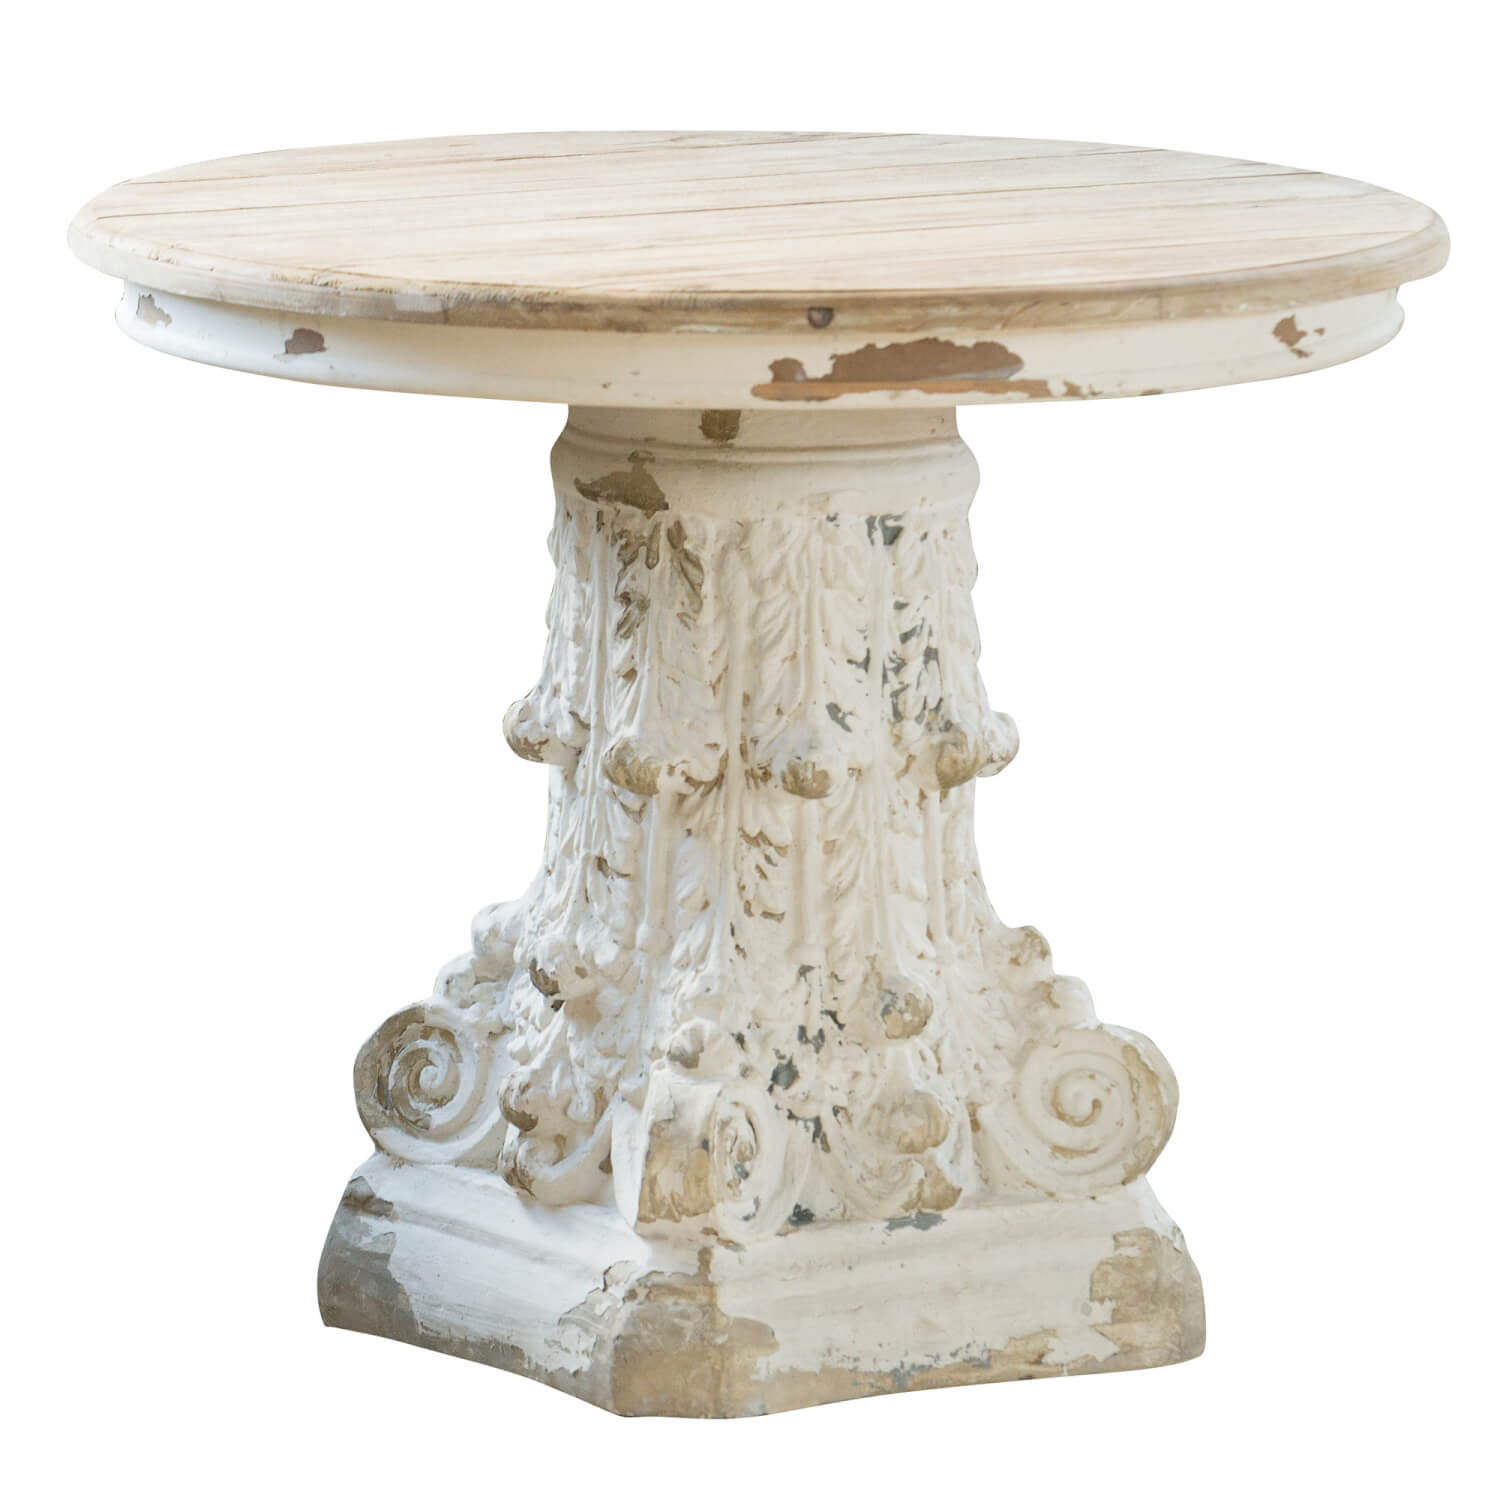 Taller Round Pedestal Table - Online Only